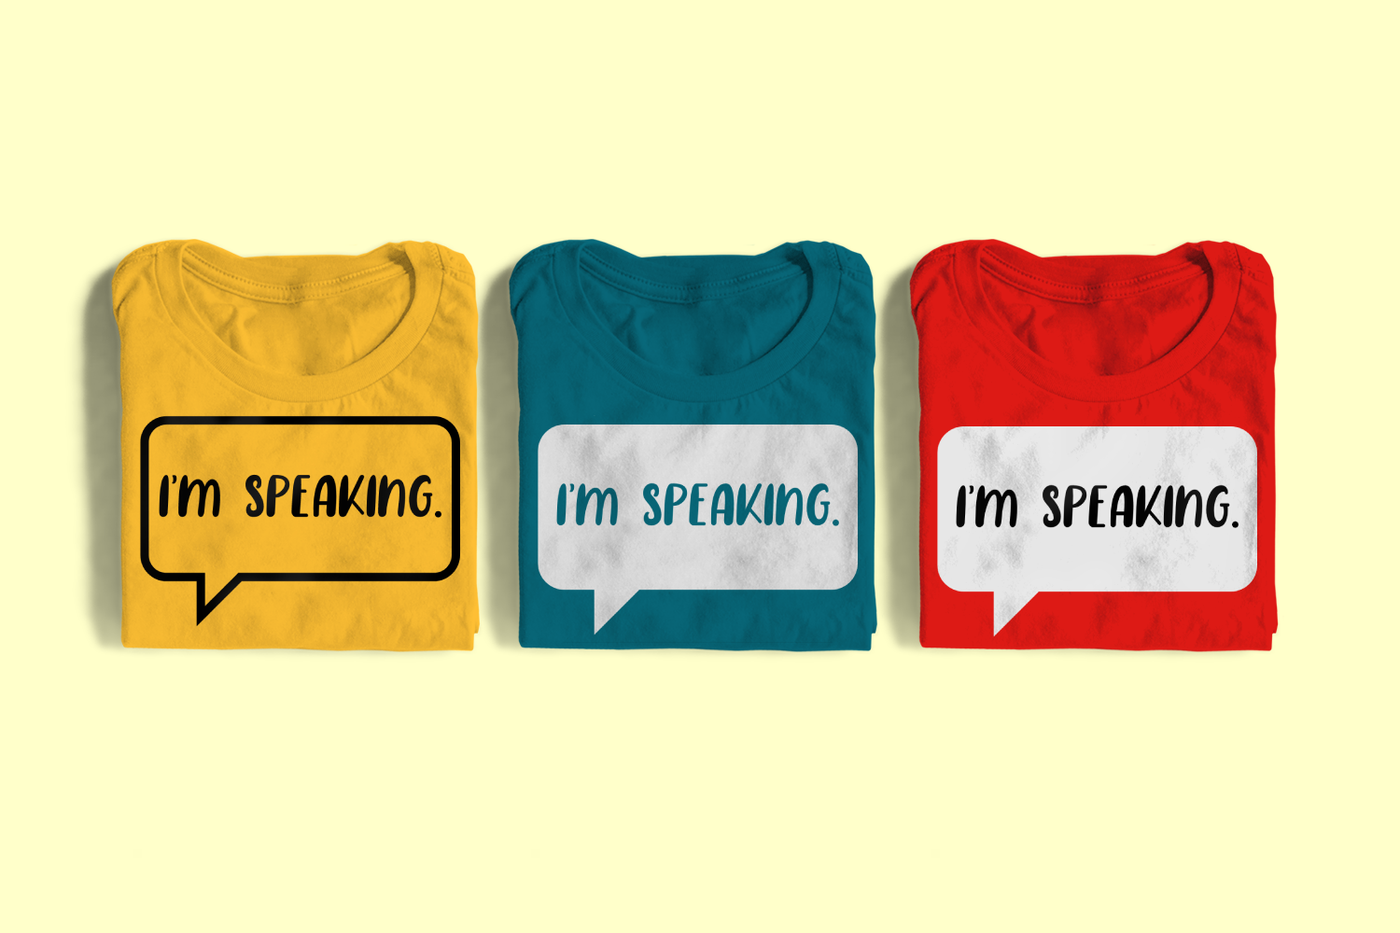 Three speech bubbles that say "I'm speaking."